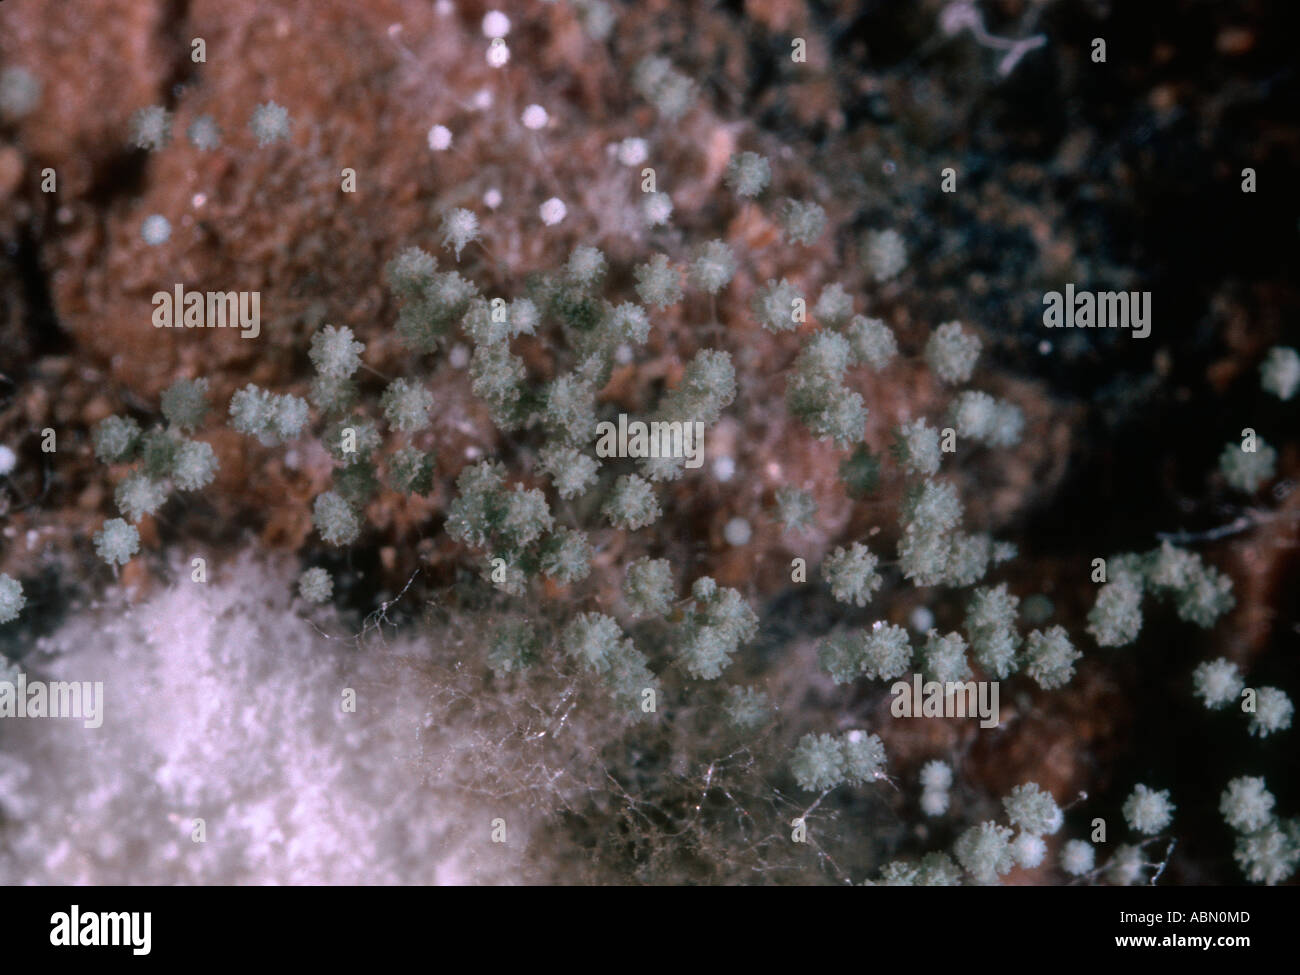 Mold, Order Mucorales. Mycelium and spores on sweet potato Stock Photo